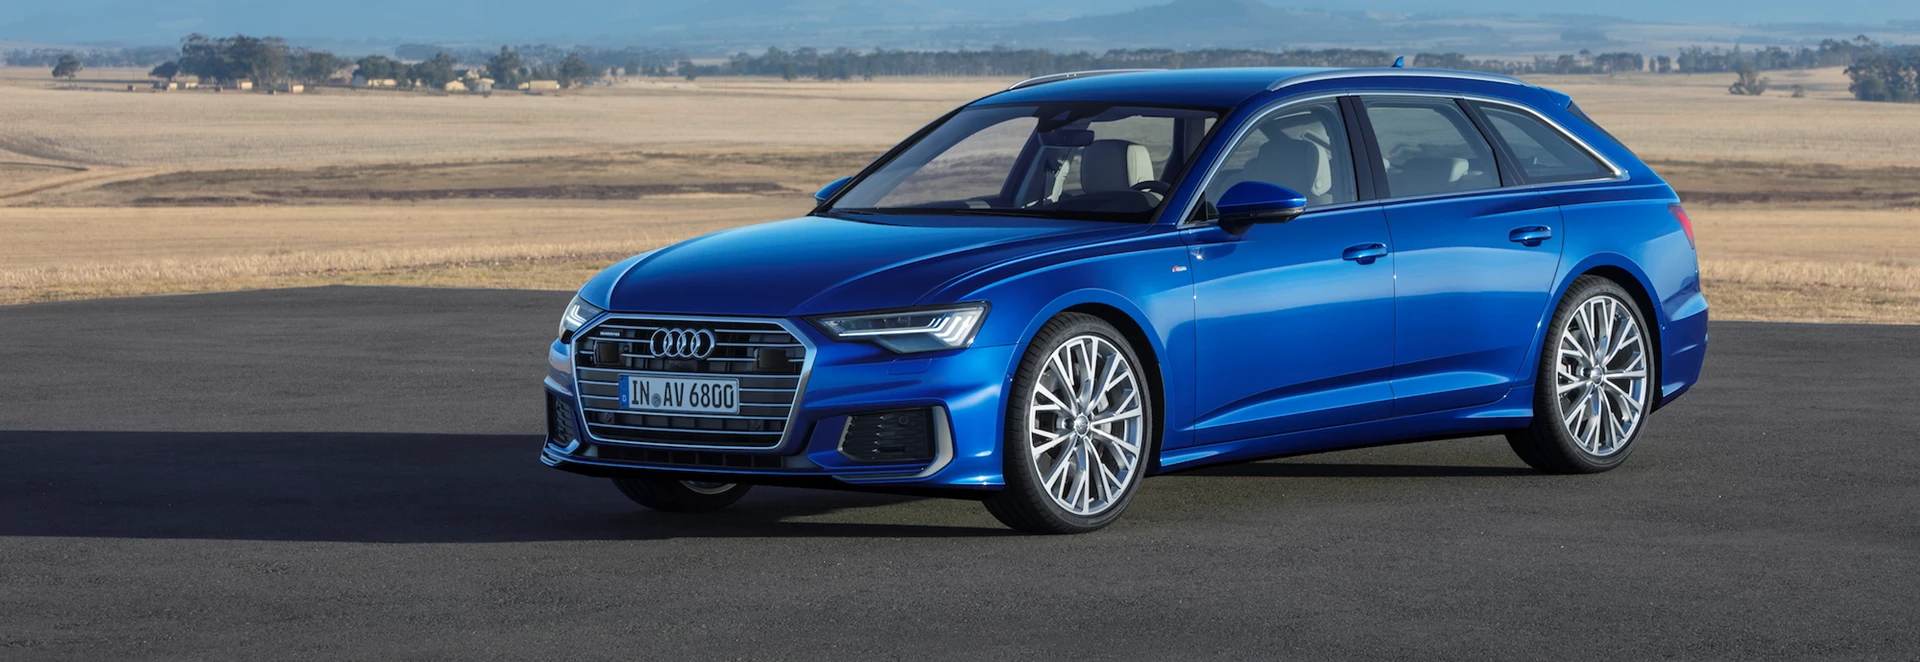 2018 Audi A6 Avant estate revealed 